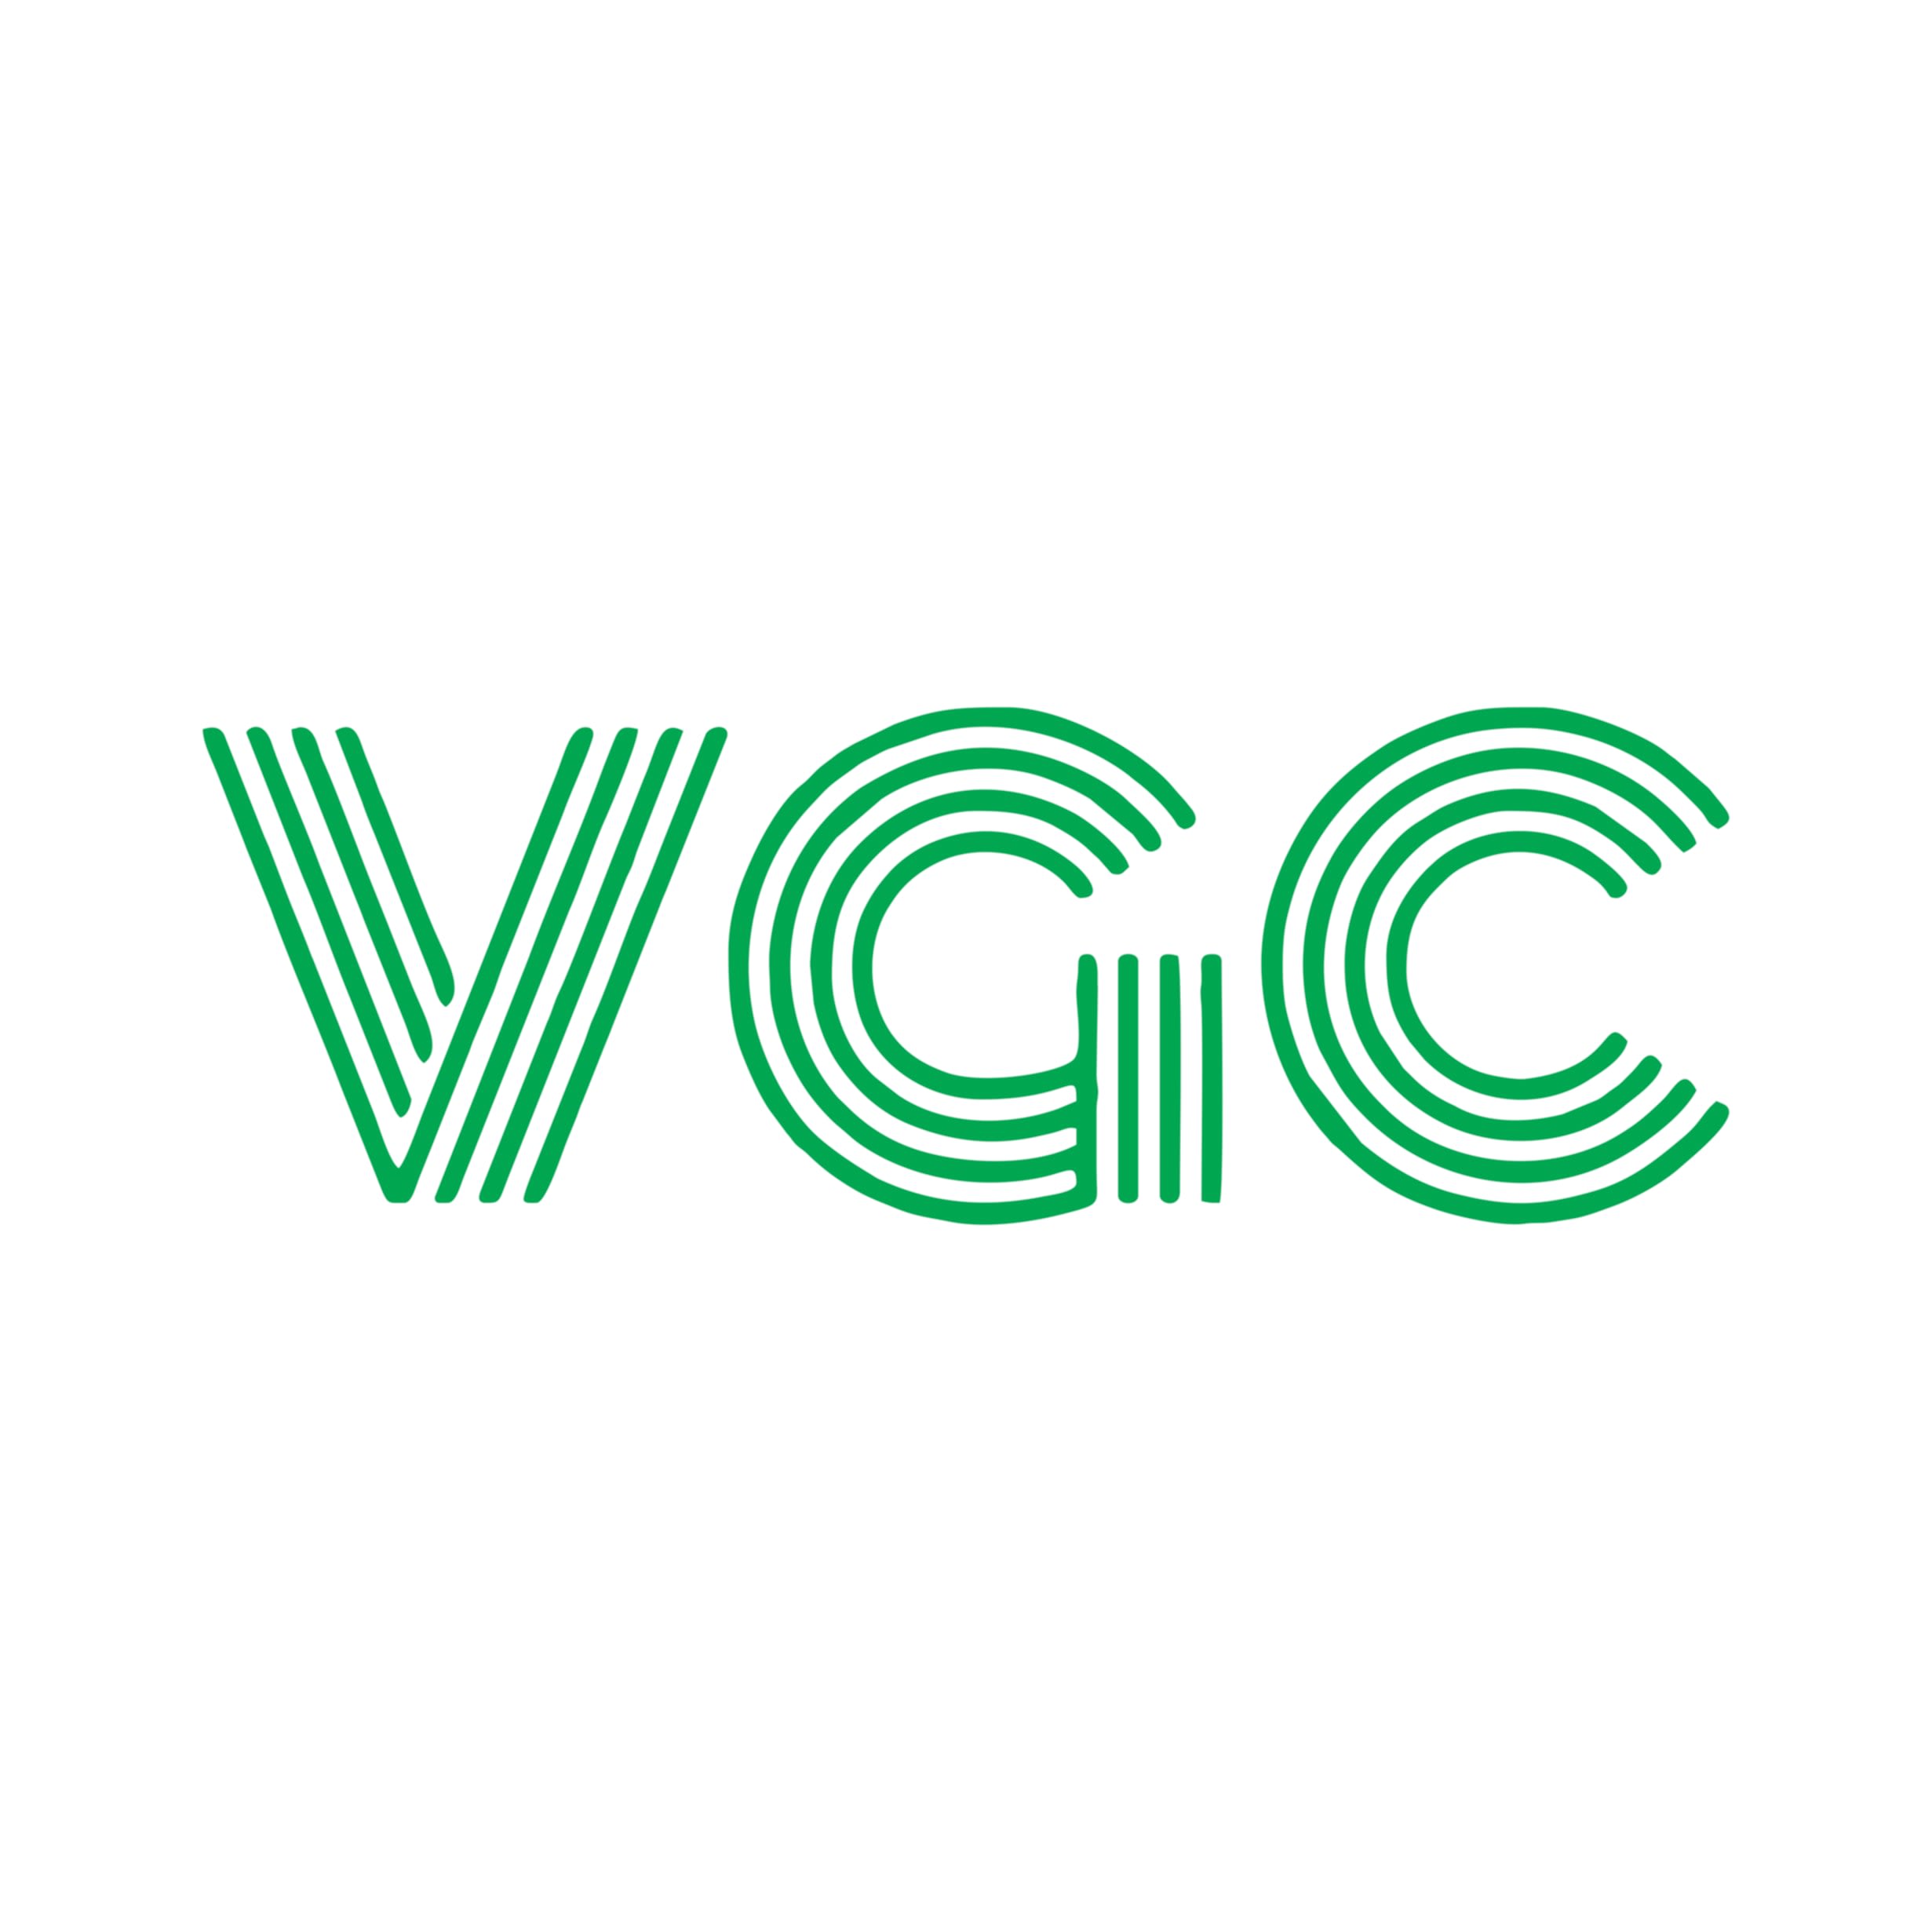 VGC Online Services